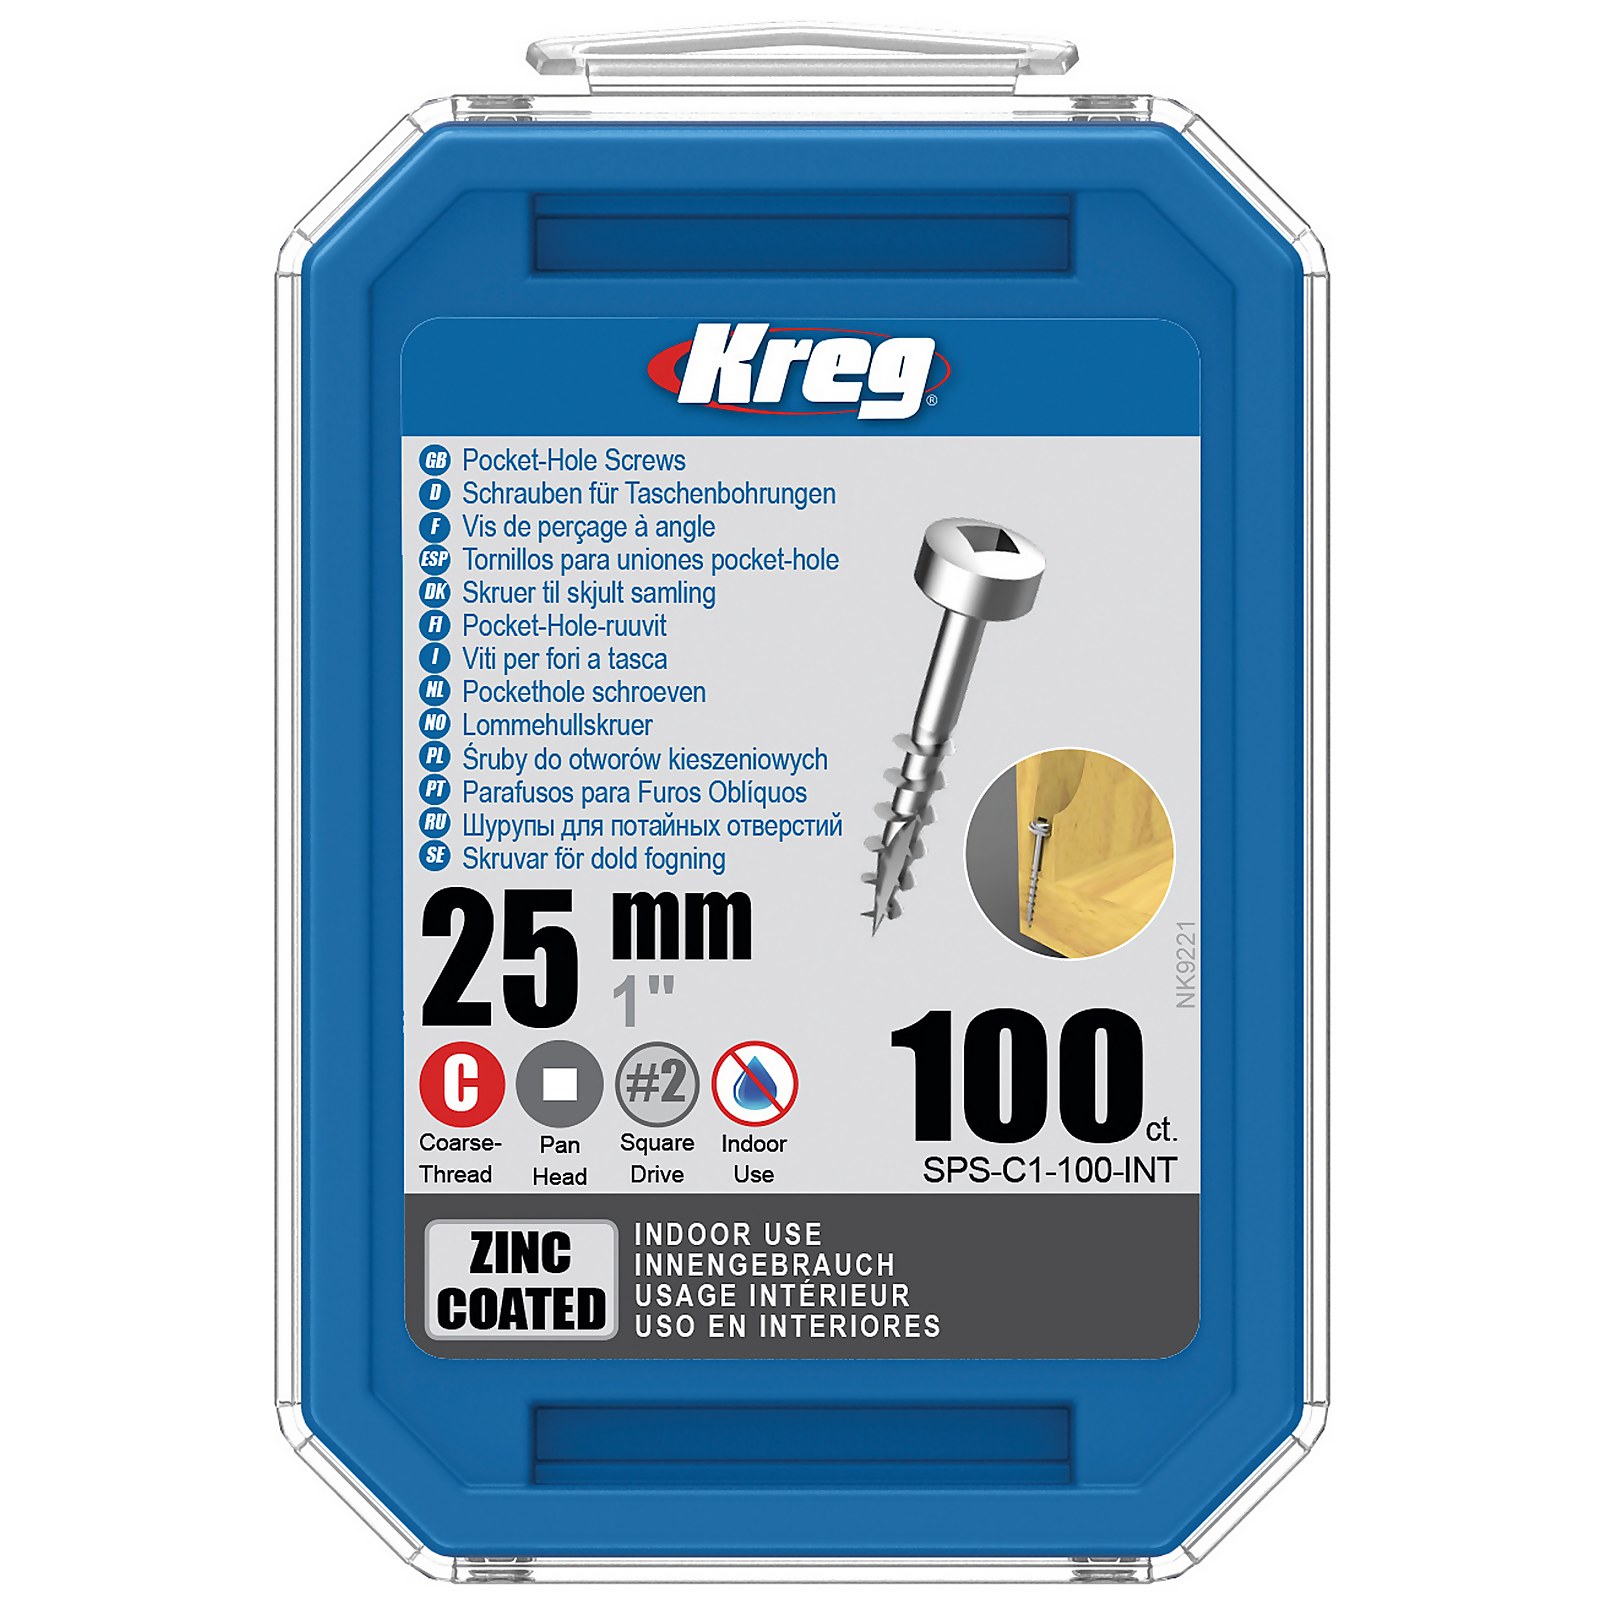 Photo of Kreg Sps-c1-100-eur Zinc Pocket-hole Screws - 25mm / 1.00 - #7 Coarse-thread- Pan Head - 100 Pack